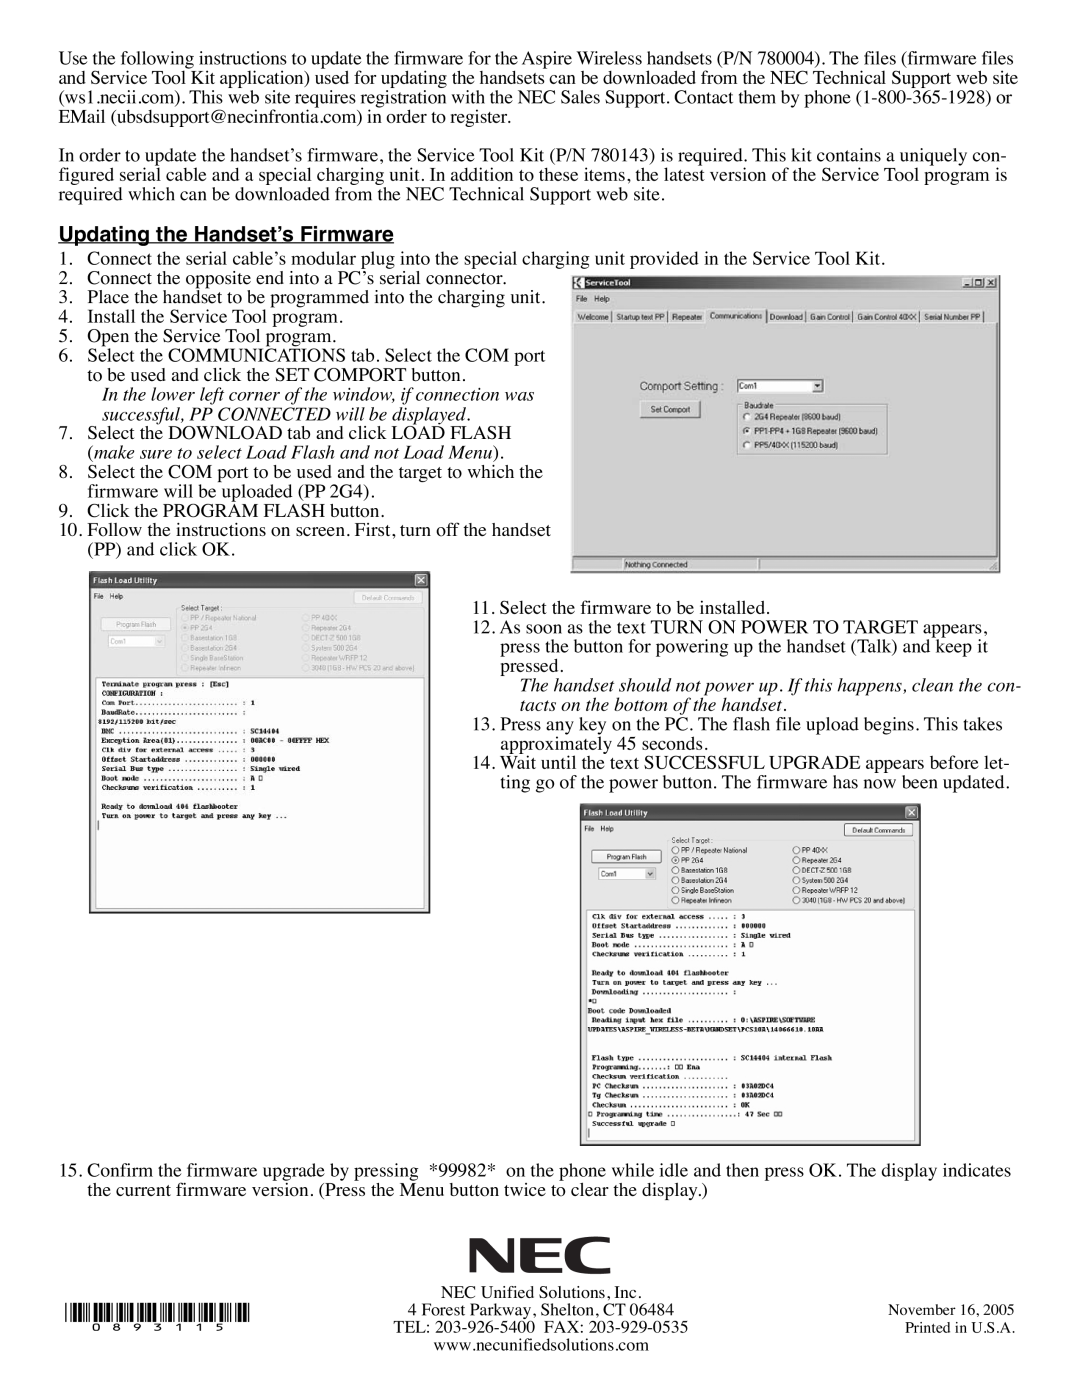 Aspire Digital 891090 manual Updating the Handset’s Firmware, 0893115 